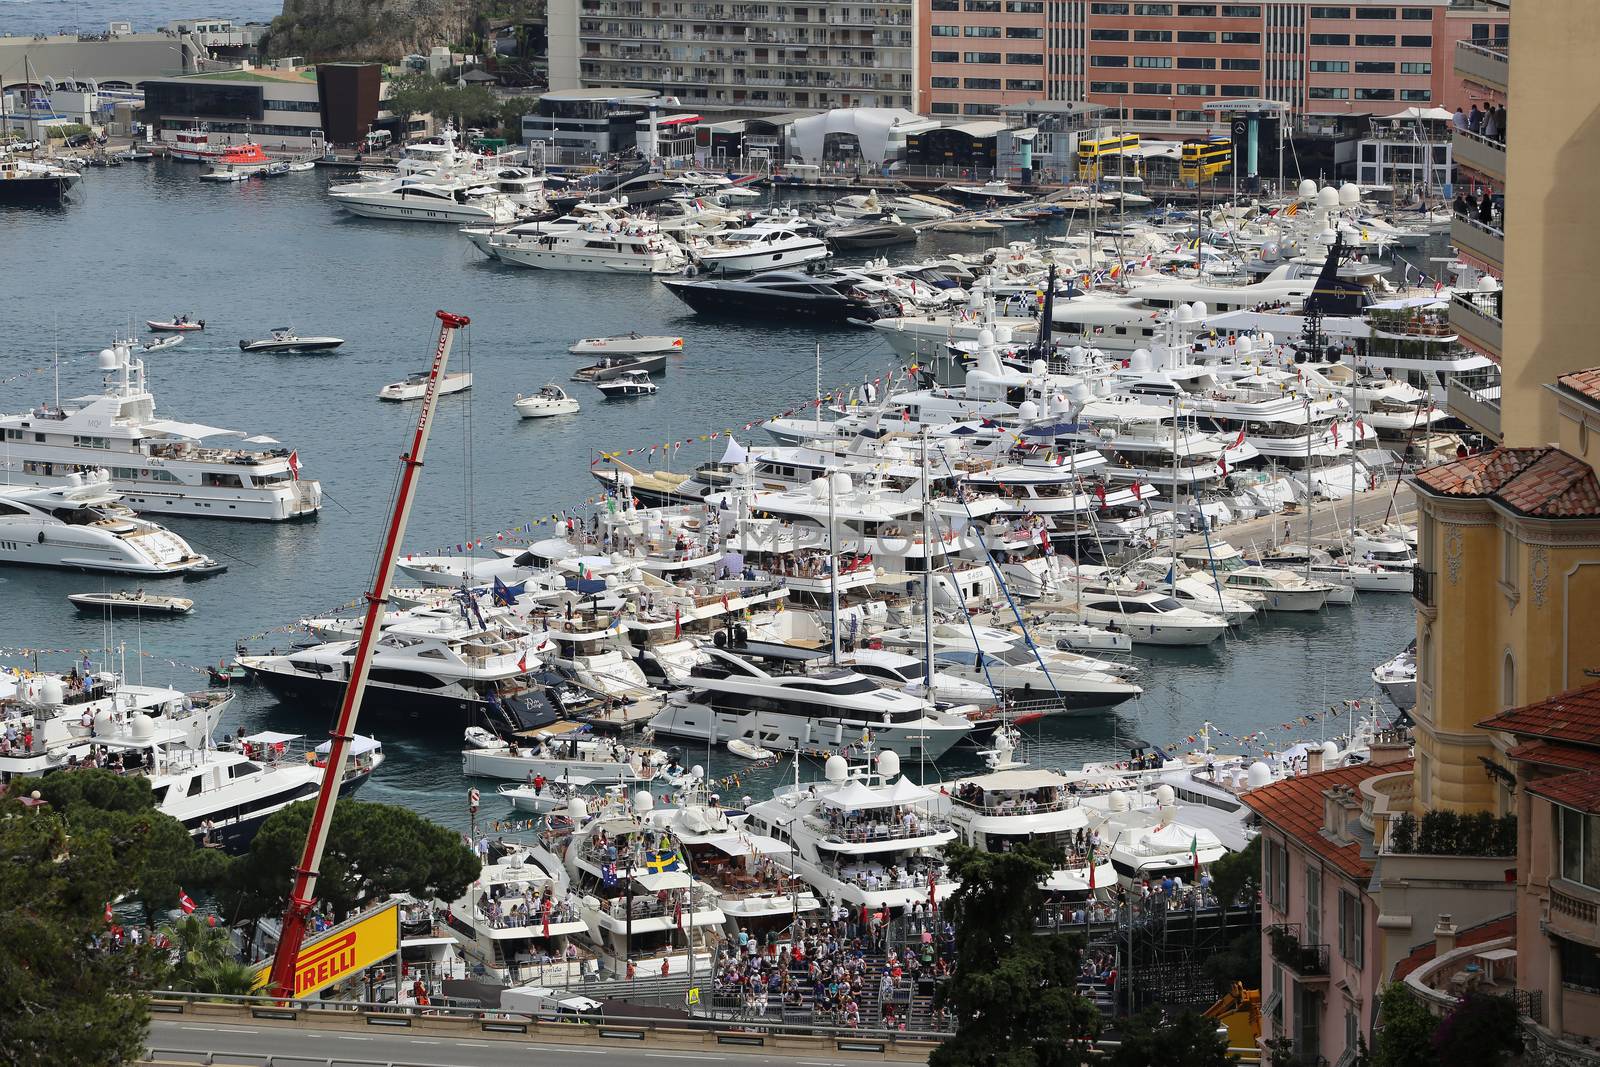 Many Spectators watch the F1 Monaco Grand Prix 2016 From the Yac by bensib